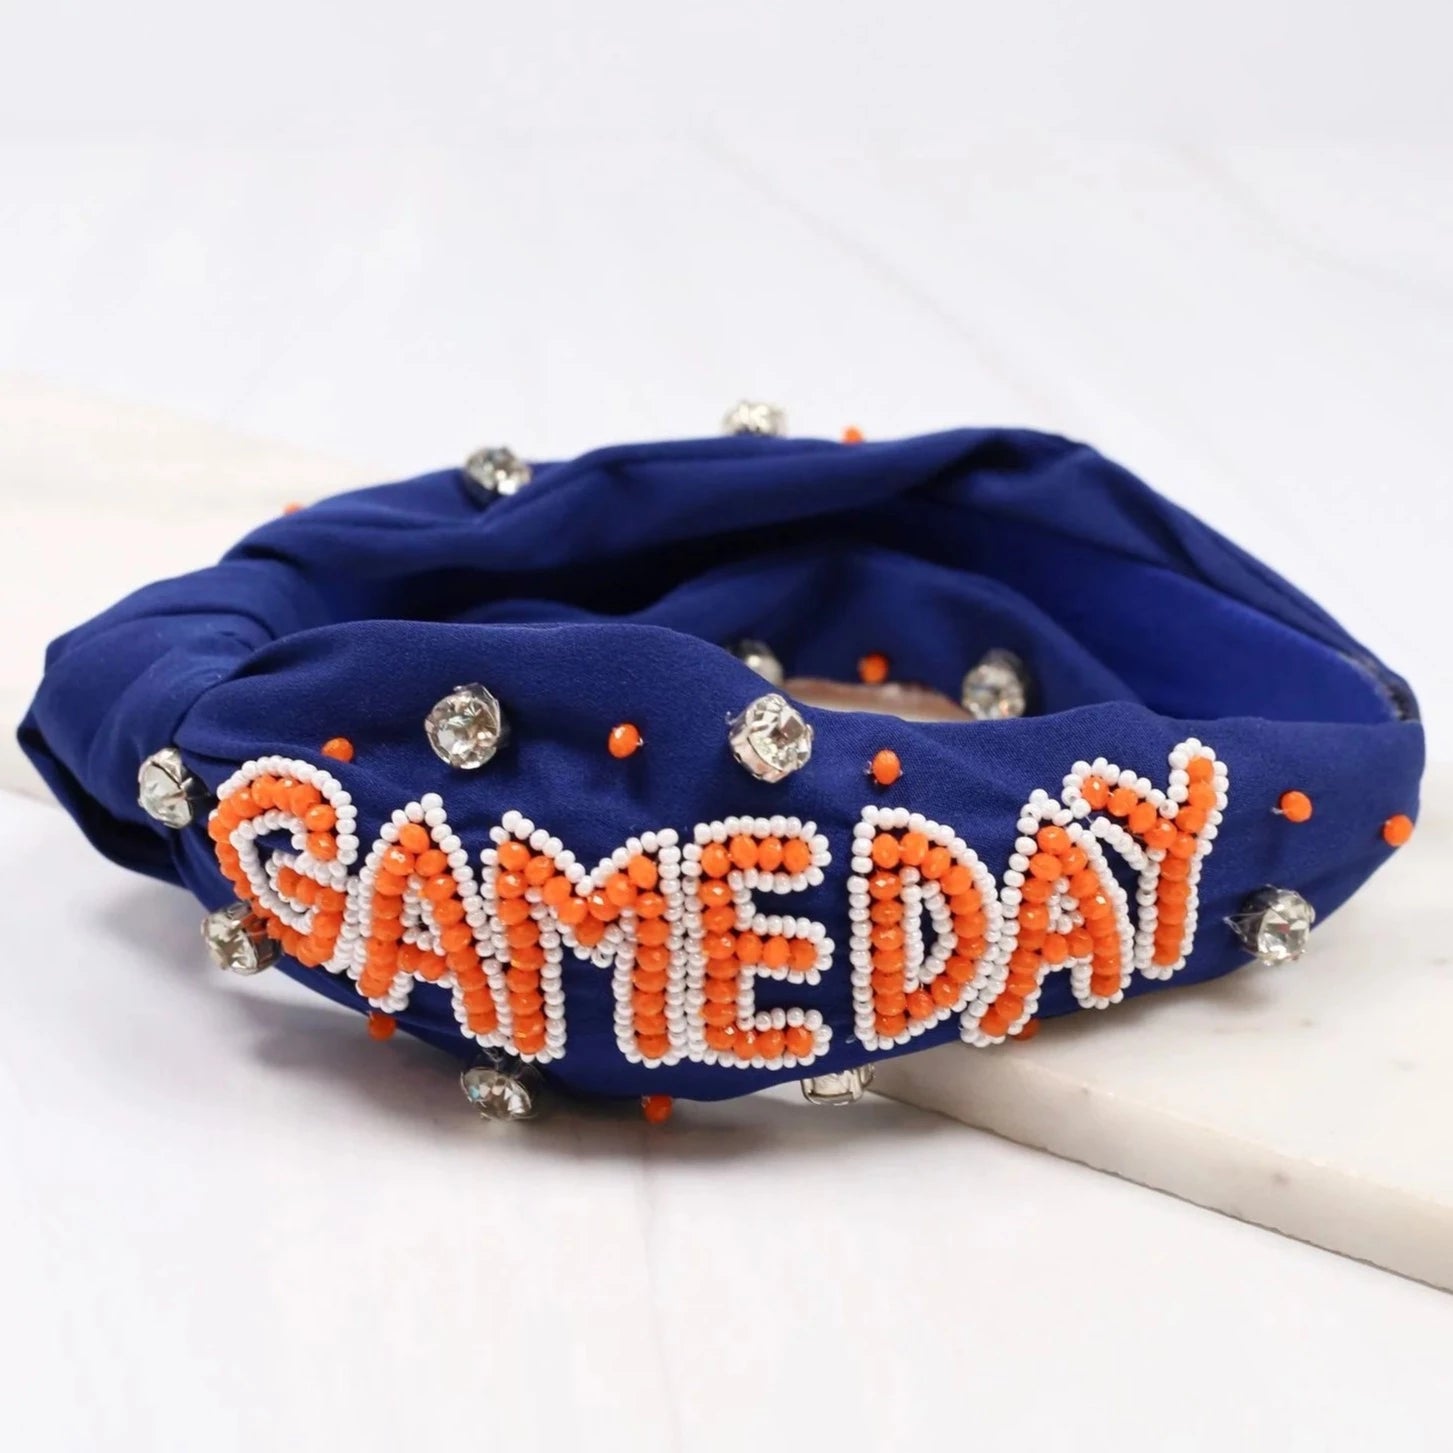 Gameday Embellished Headband - Orange & Navy-Headbands-LouisGeorge Boutique-LouisGeorge Boutique, Women’s Fashion Boutique Located in Trussville, Alabama